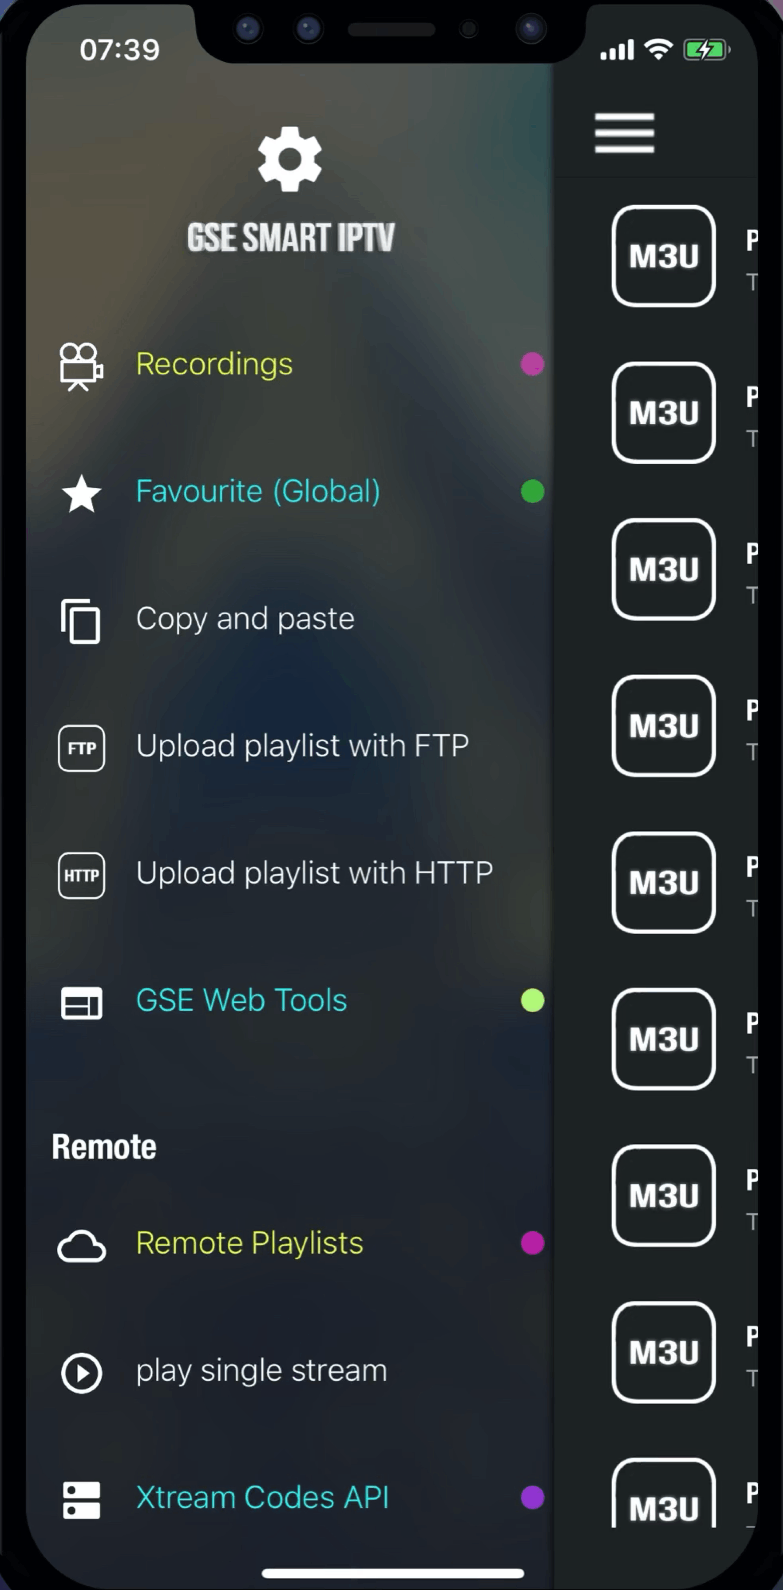 Select Remote Playlists to stream Summit IPTV